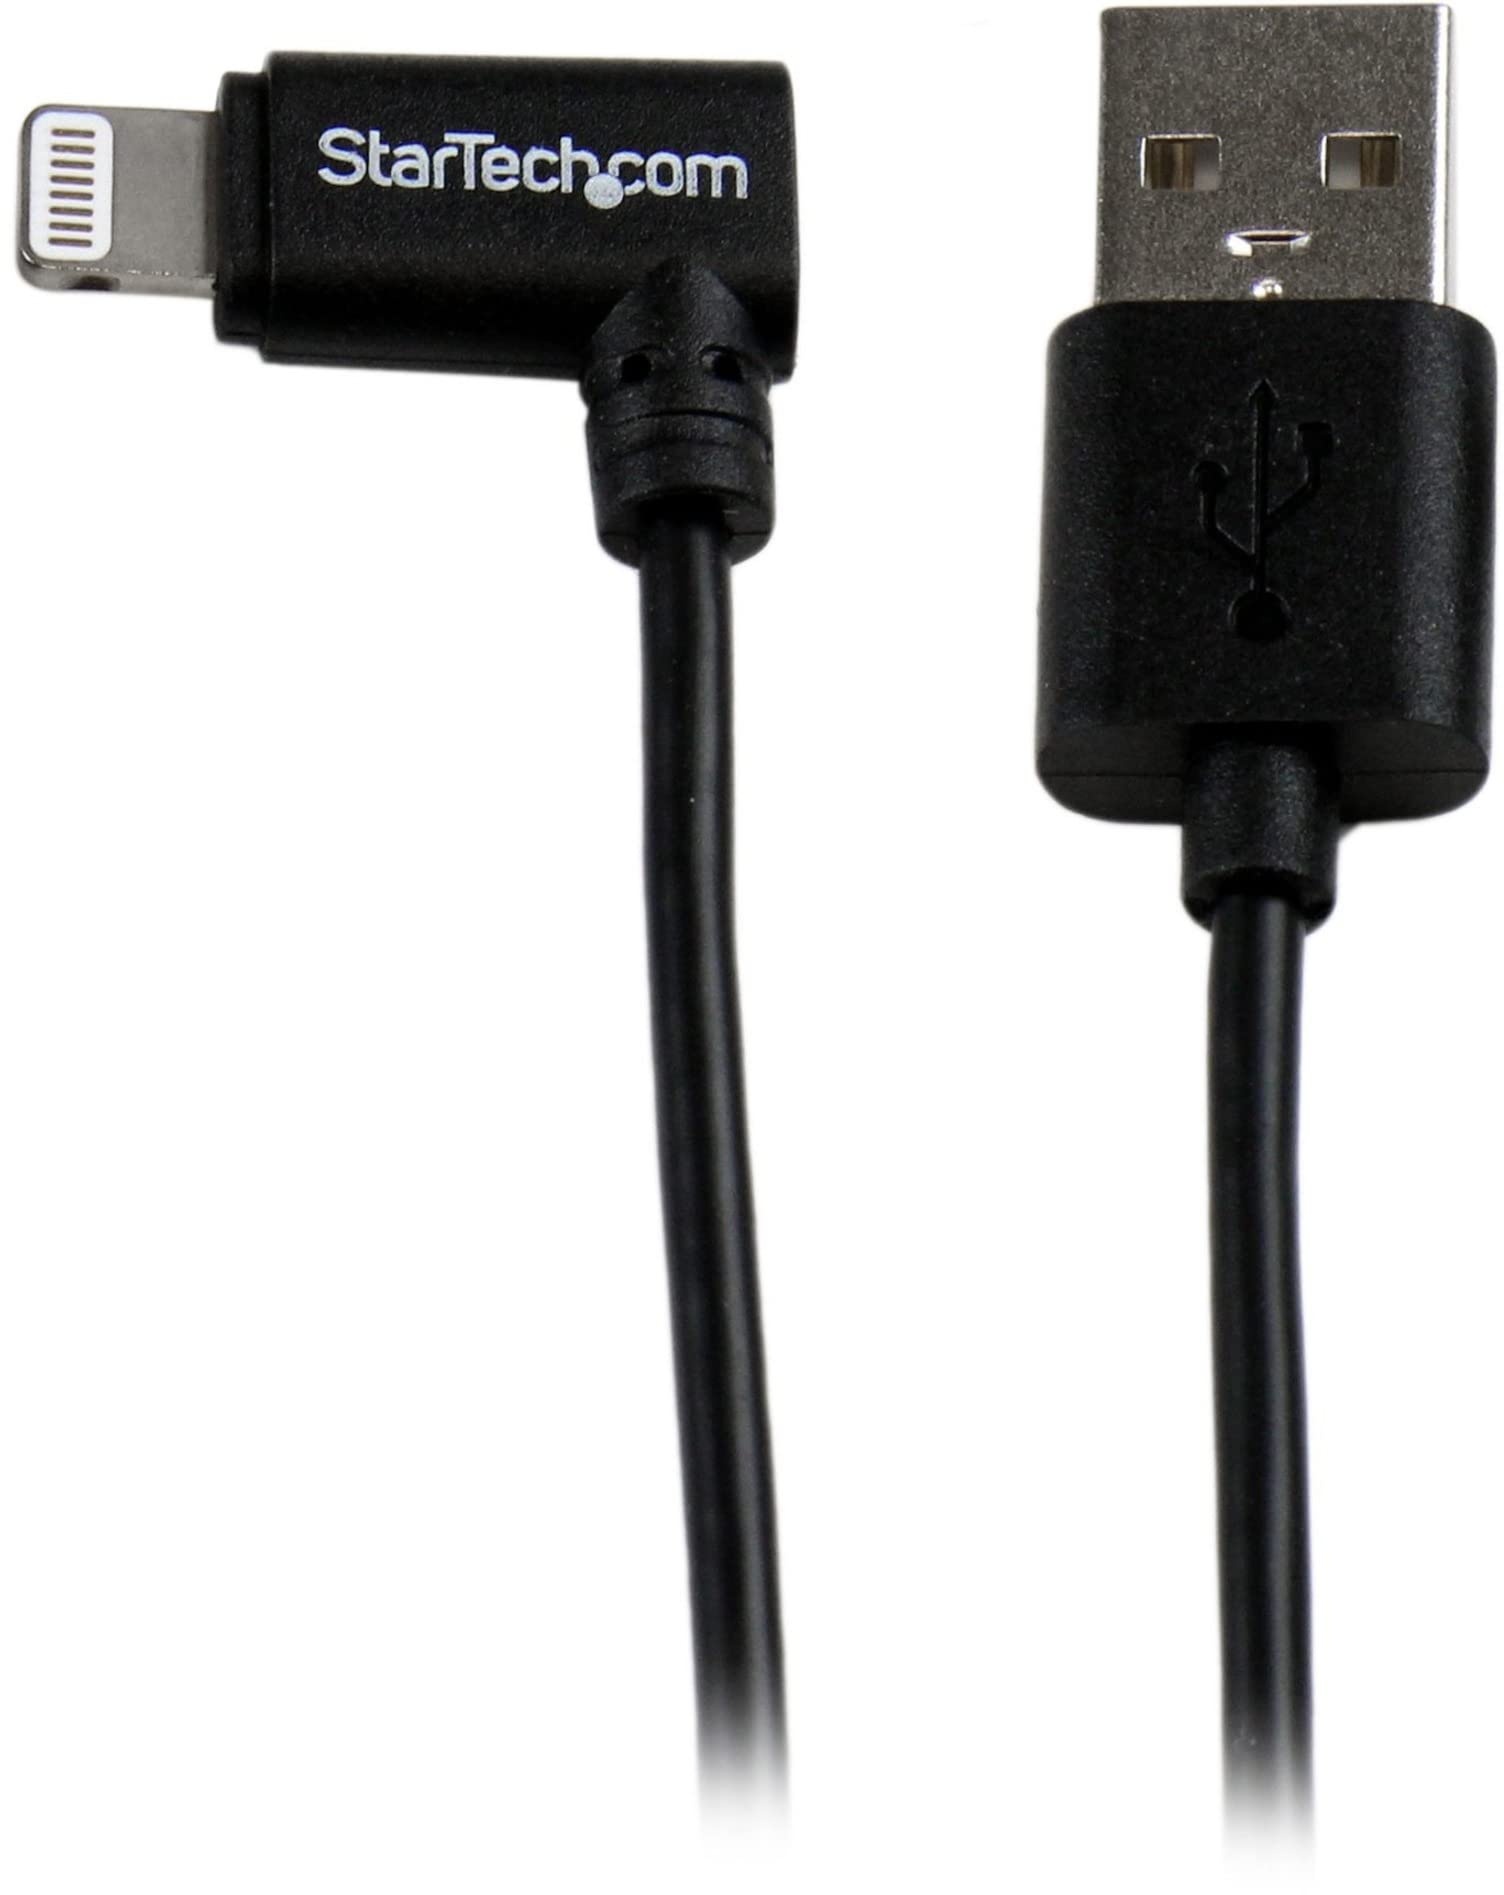 StarTech.com 2m USB auf Apple 8-pin Lightning Connector Kabel gewinkelt - Schwarz - iPhone / iPod / iPad - Ladekabel / Datenkabel